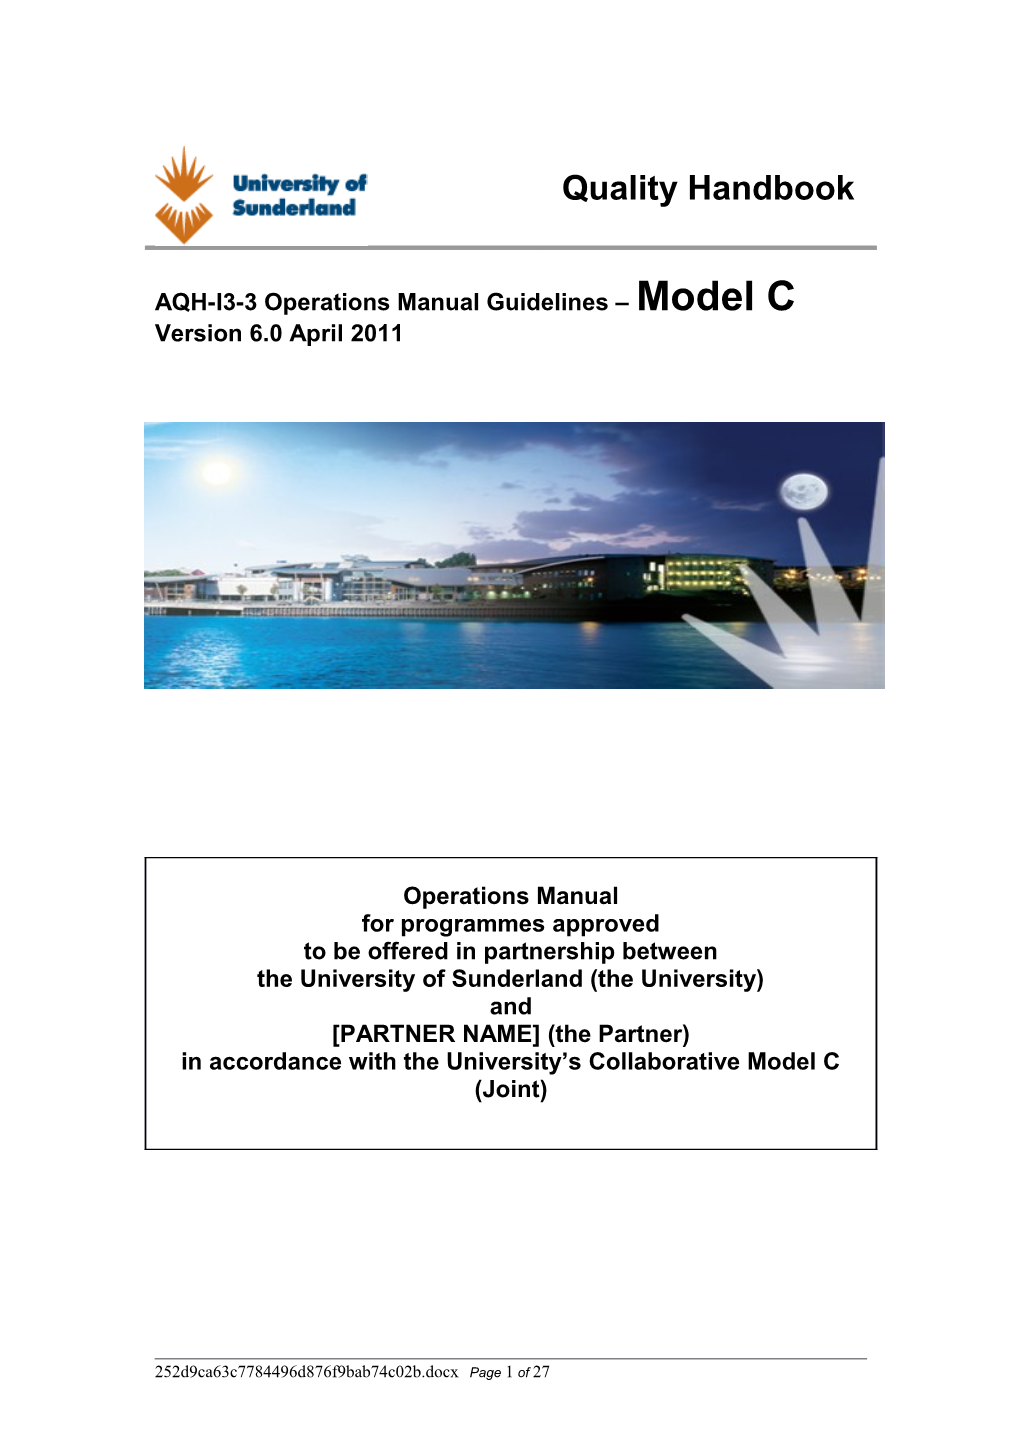 AQH-I3-3 Operations Manual Guidelines Model C